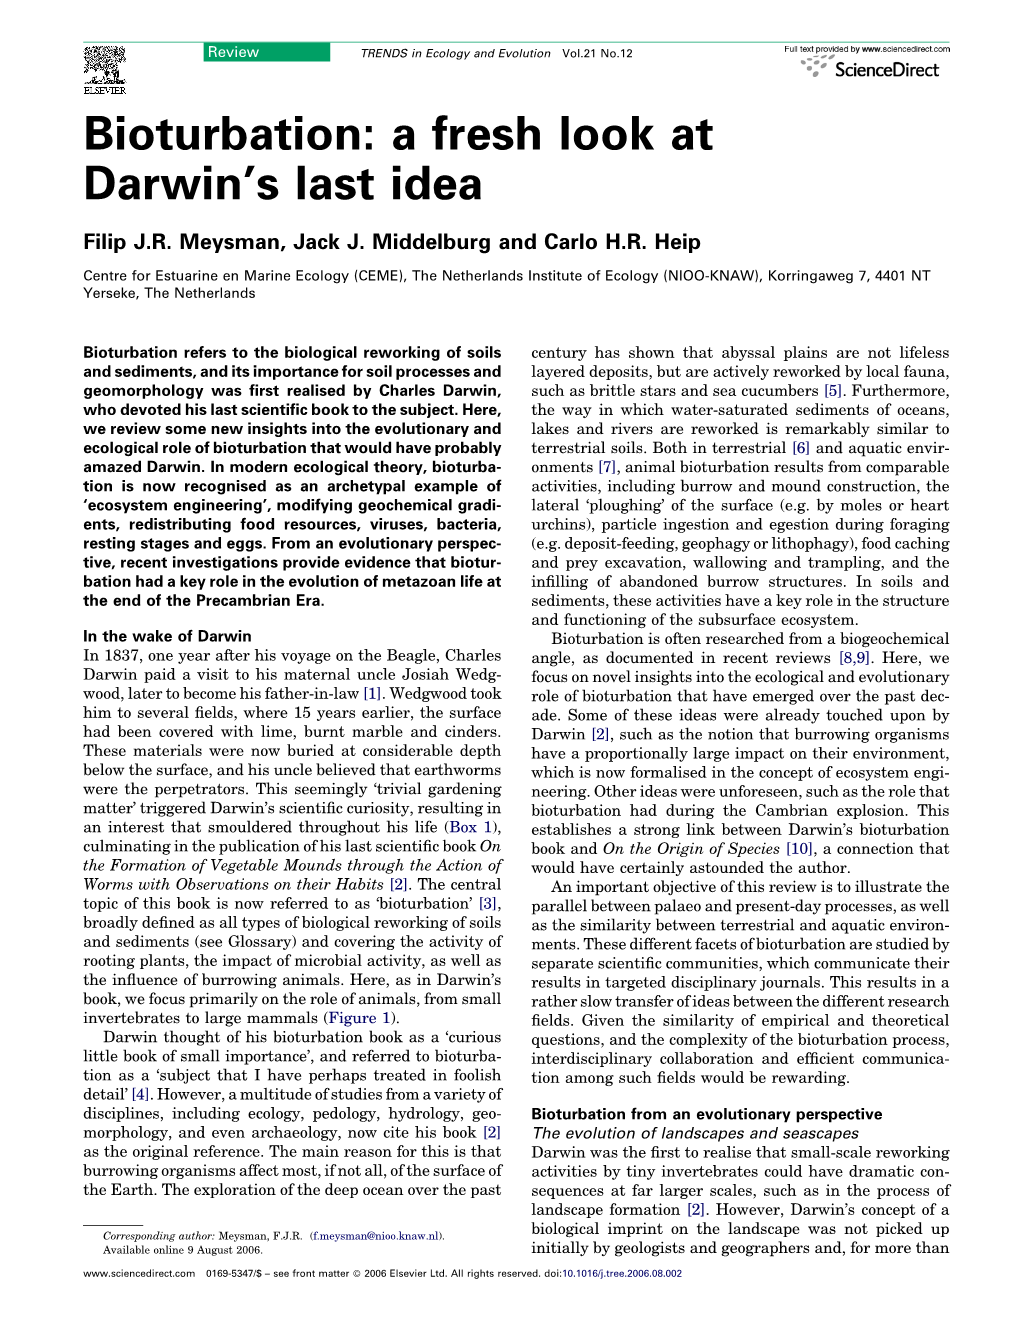 Bioturbation: a Fresh Look at Darwin's Last Idea